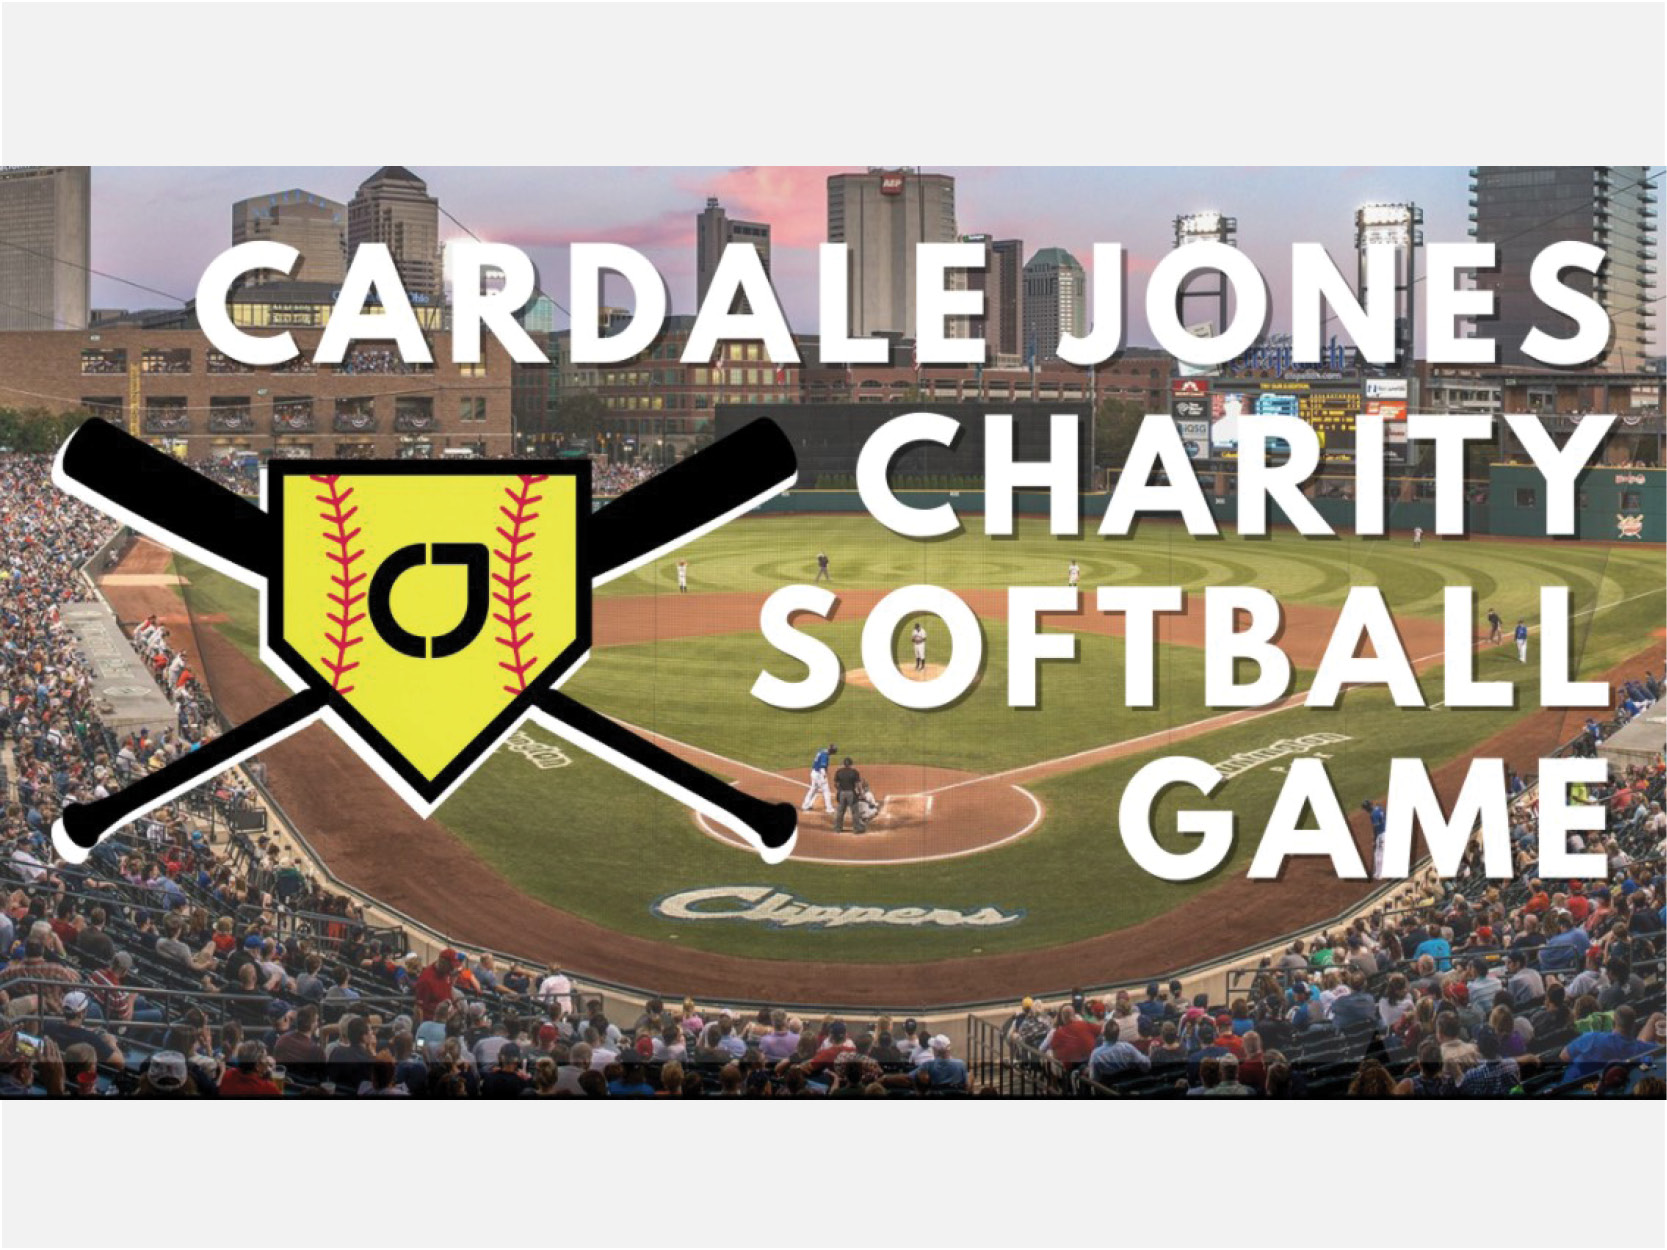 Cardale Jones Charity Softball Game